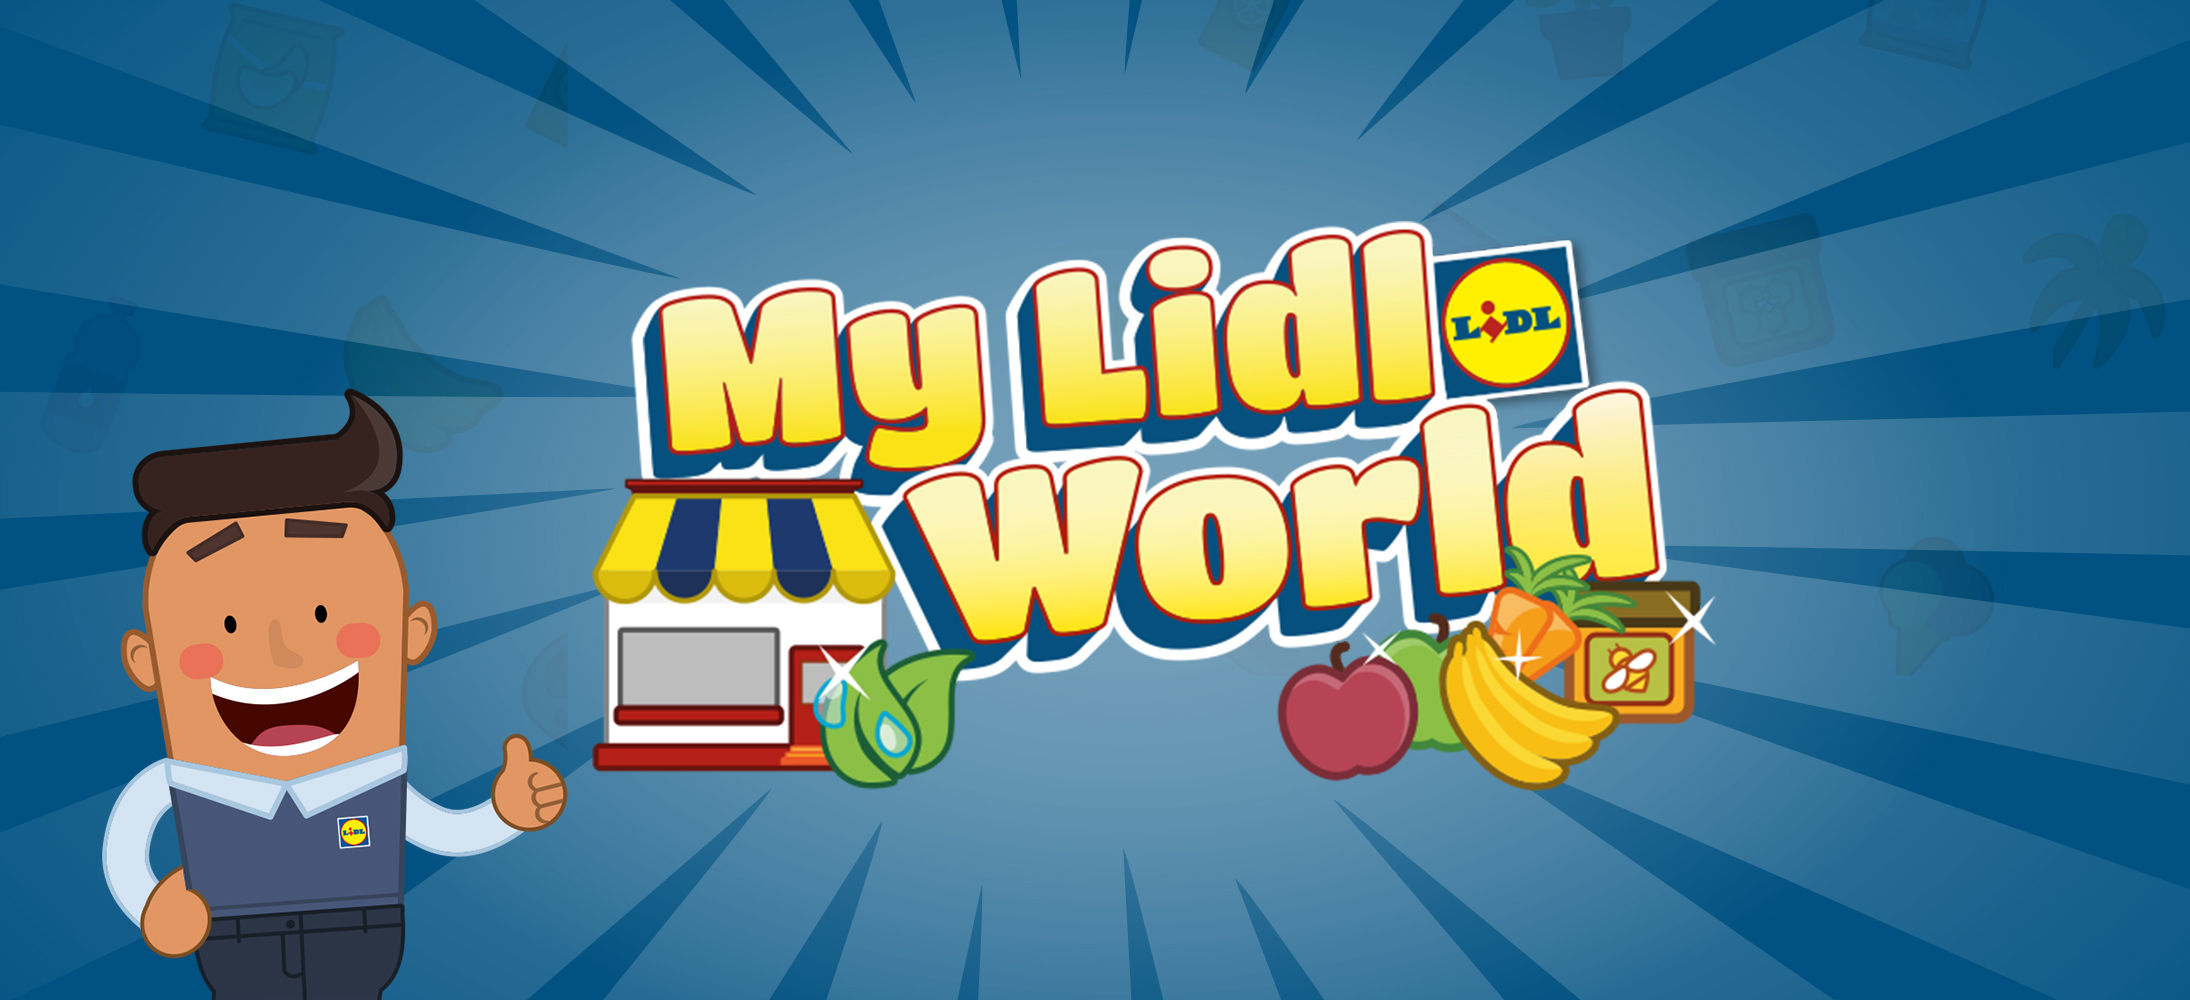 My Lidl World!